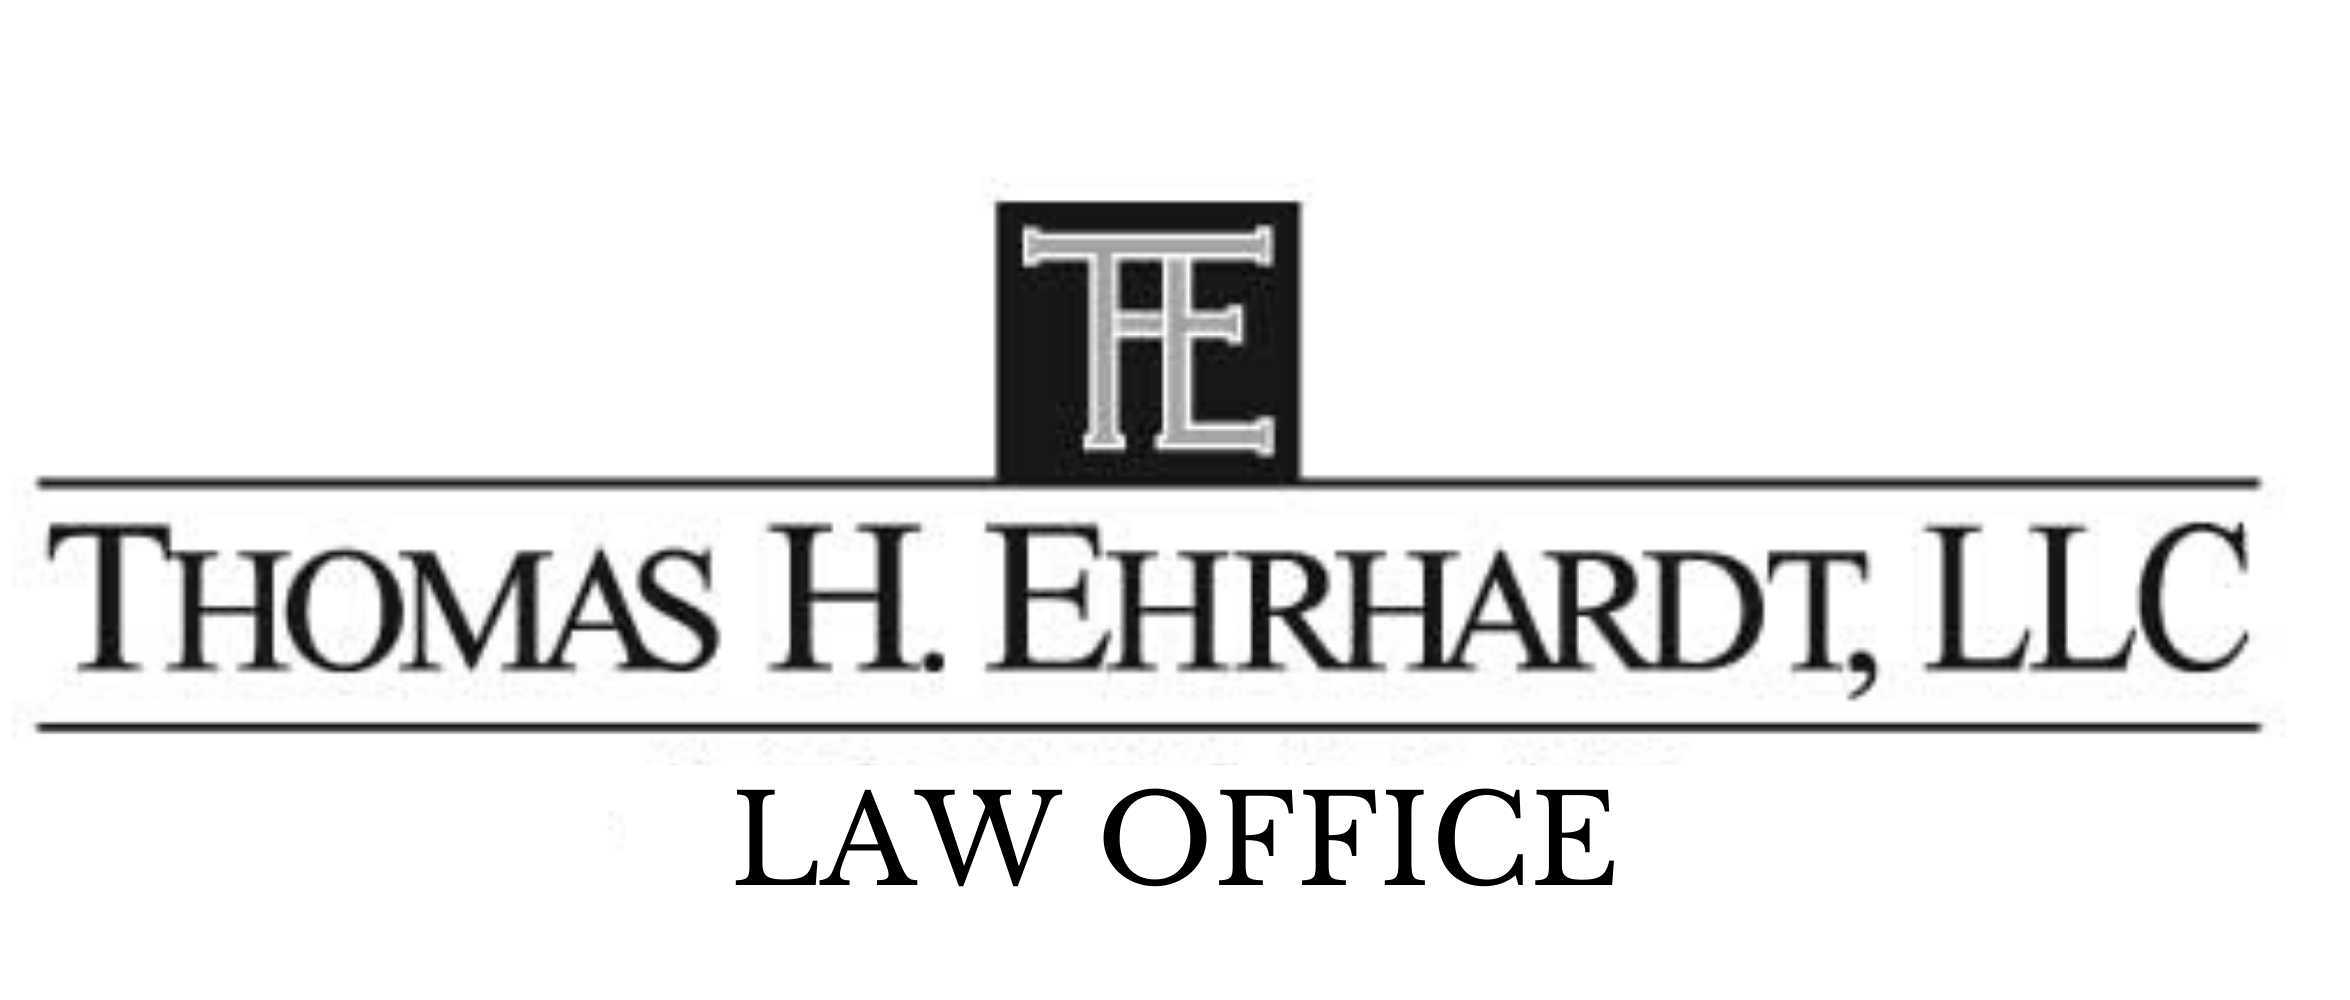 Thomas H. Ehrhardt, LLC